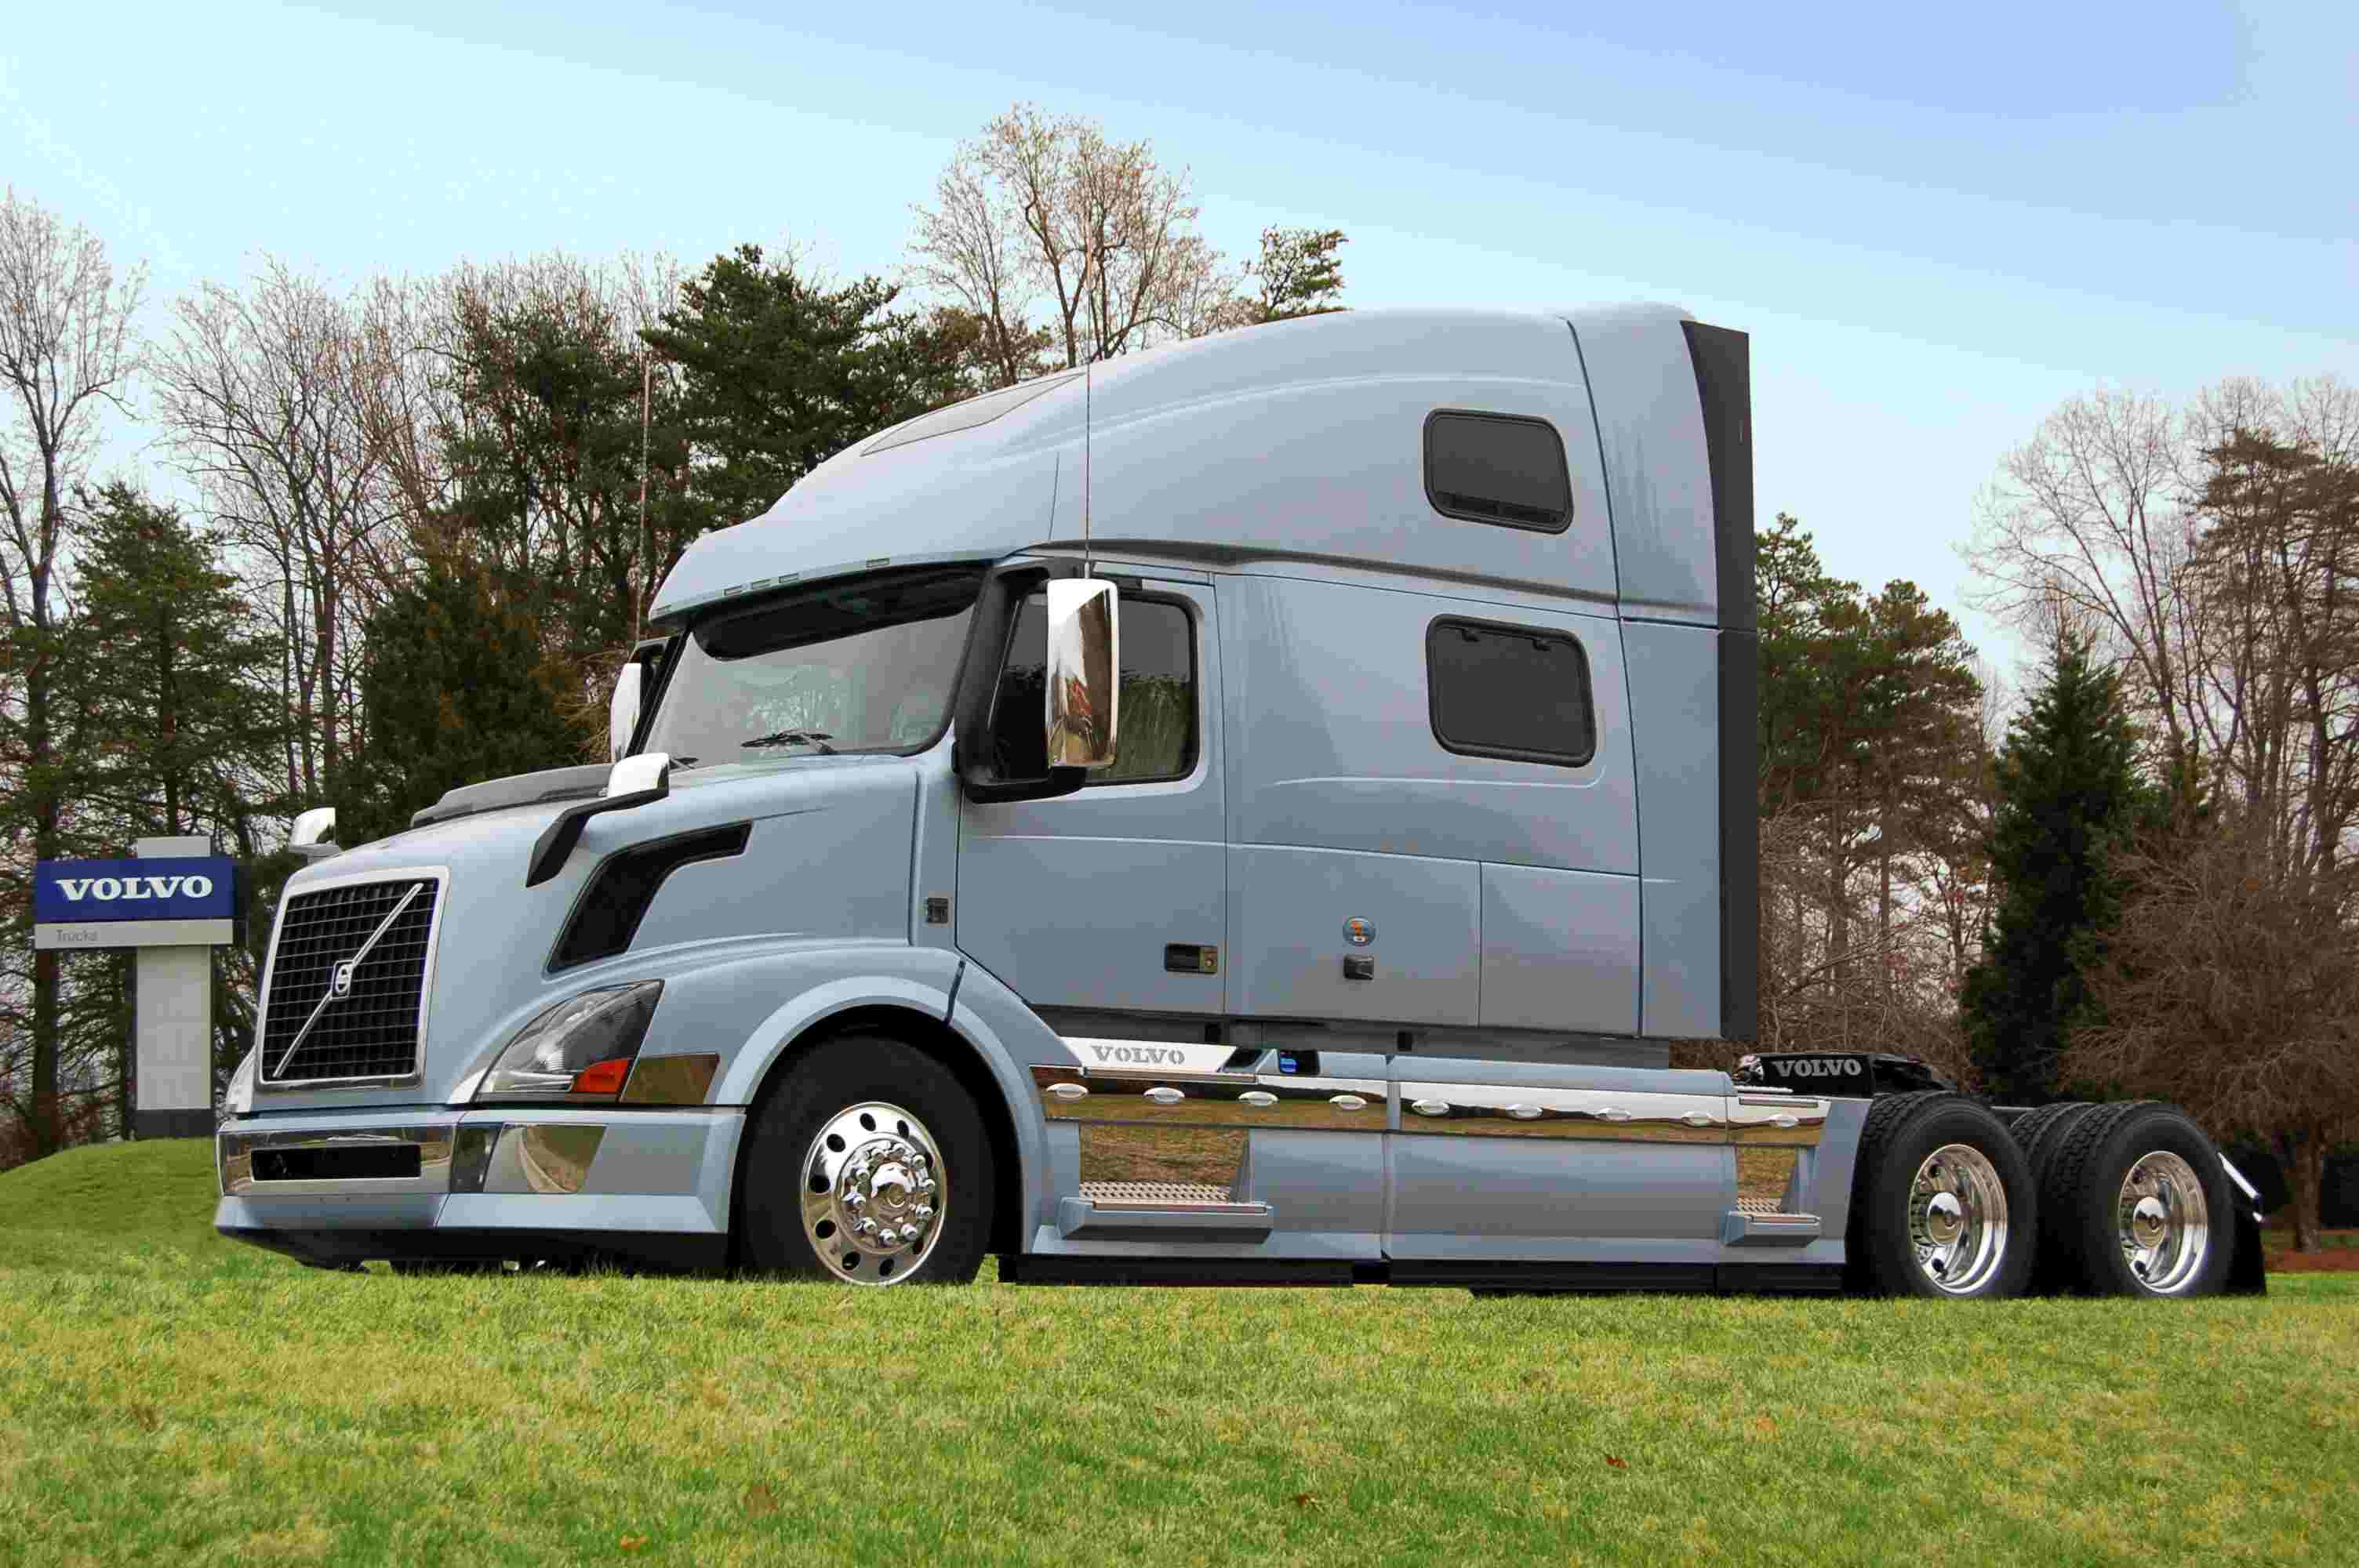 Volvo Trucks North America Logo - Volvo Trucks to ramp up production, recall 700 employees